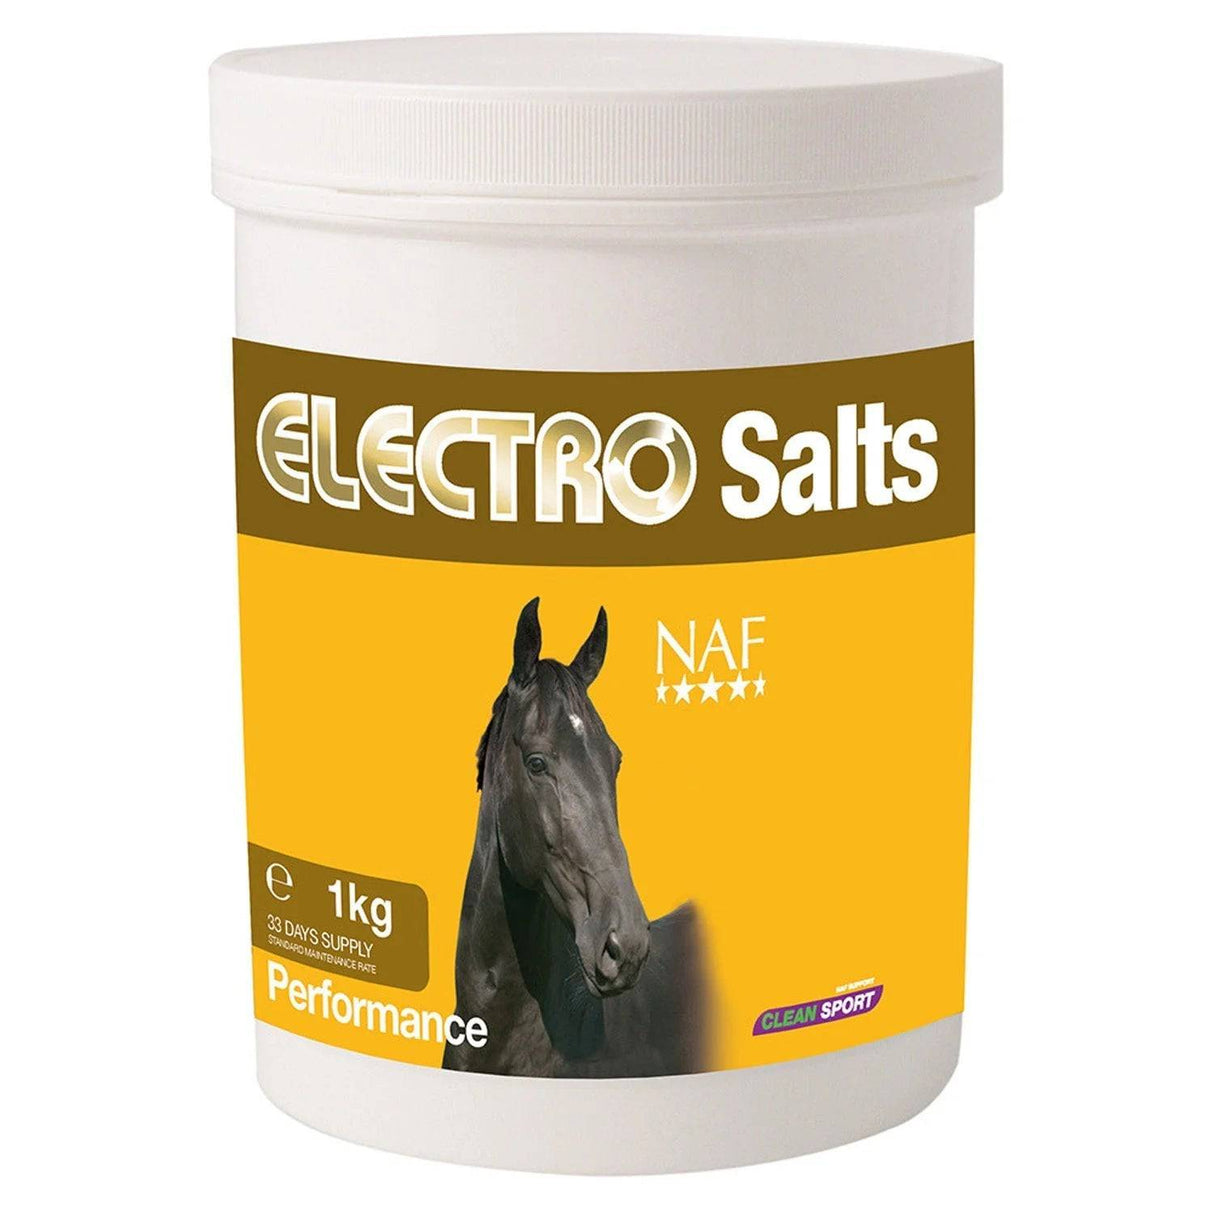 NAF Electro Salts Electrolytes For Horses Horse Supplements 1Kg Barnstaple Equestrian Supplies